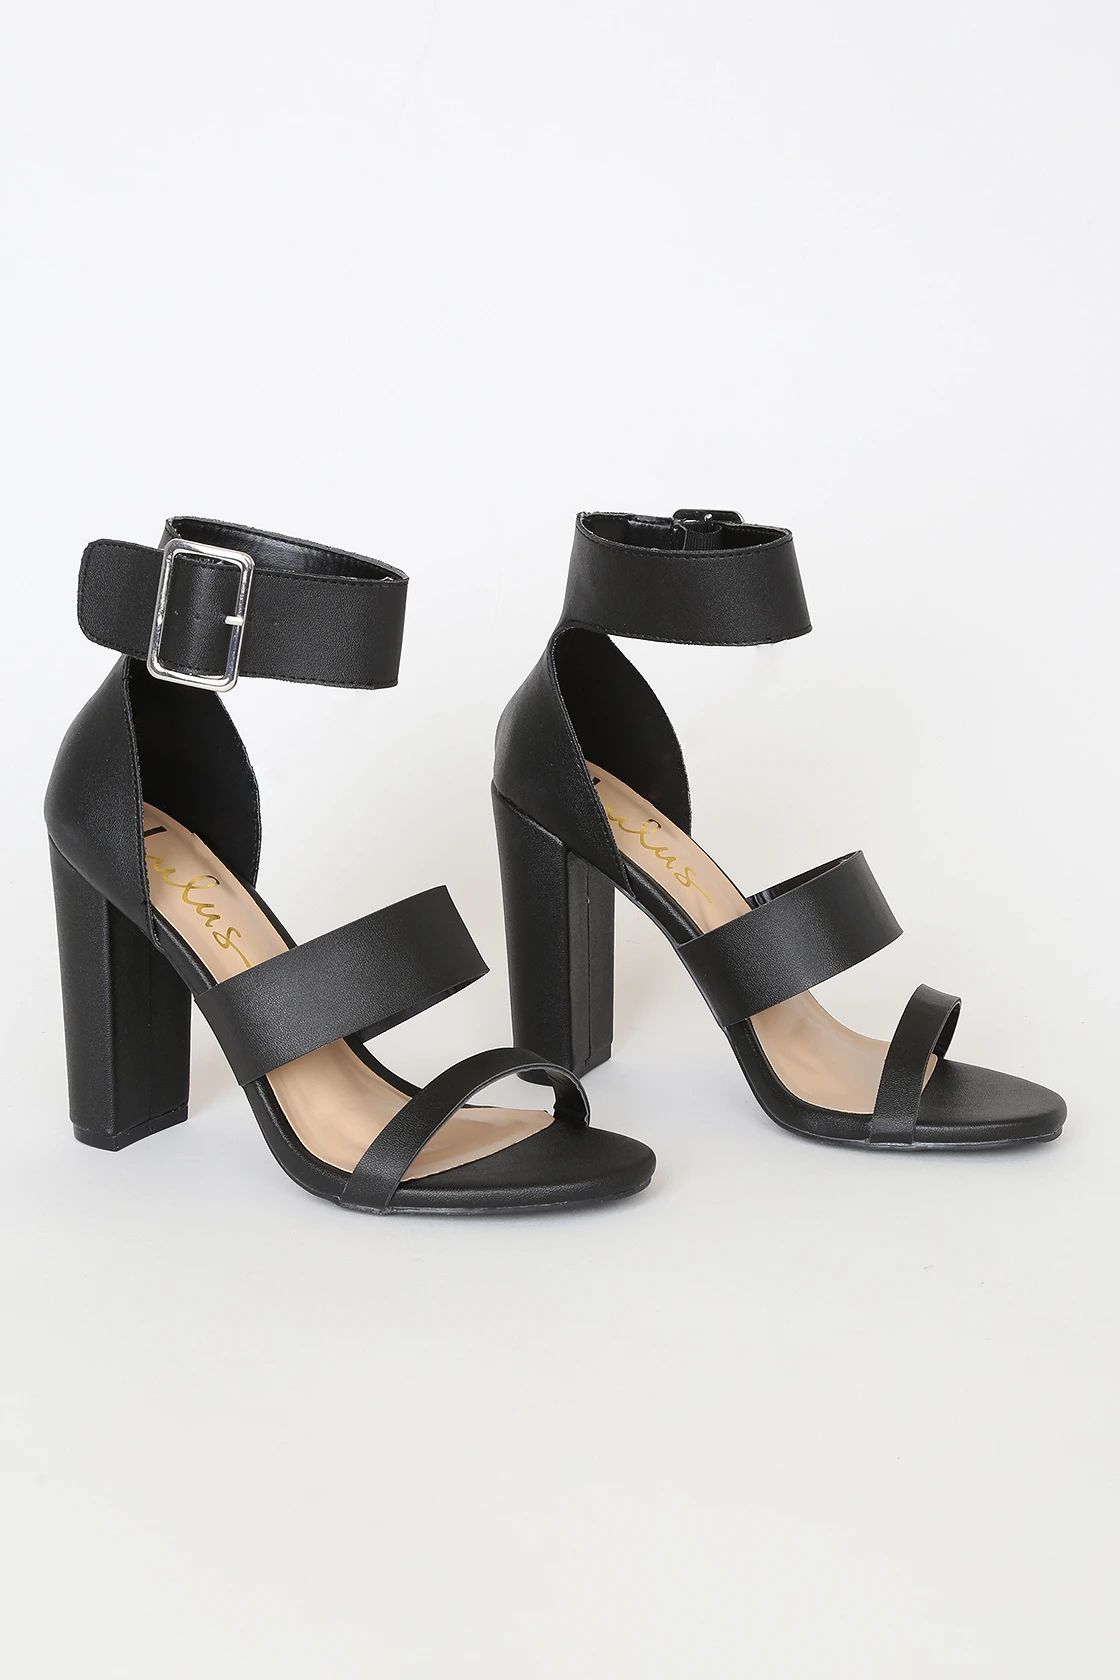 Margaret Black Ankle-Strap Heels | Lulus (US)